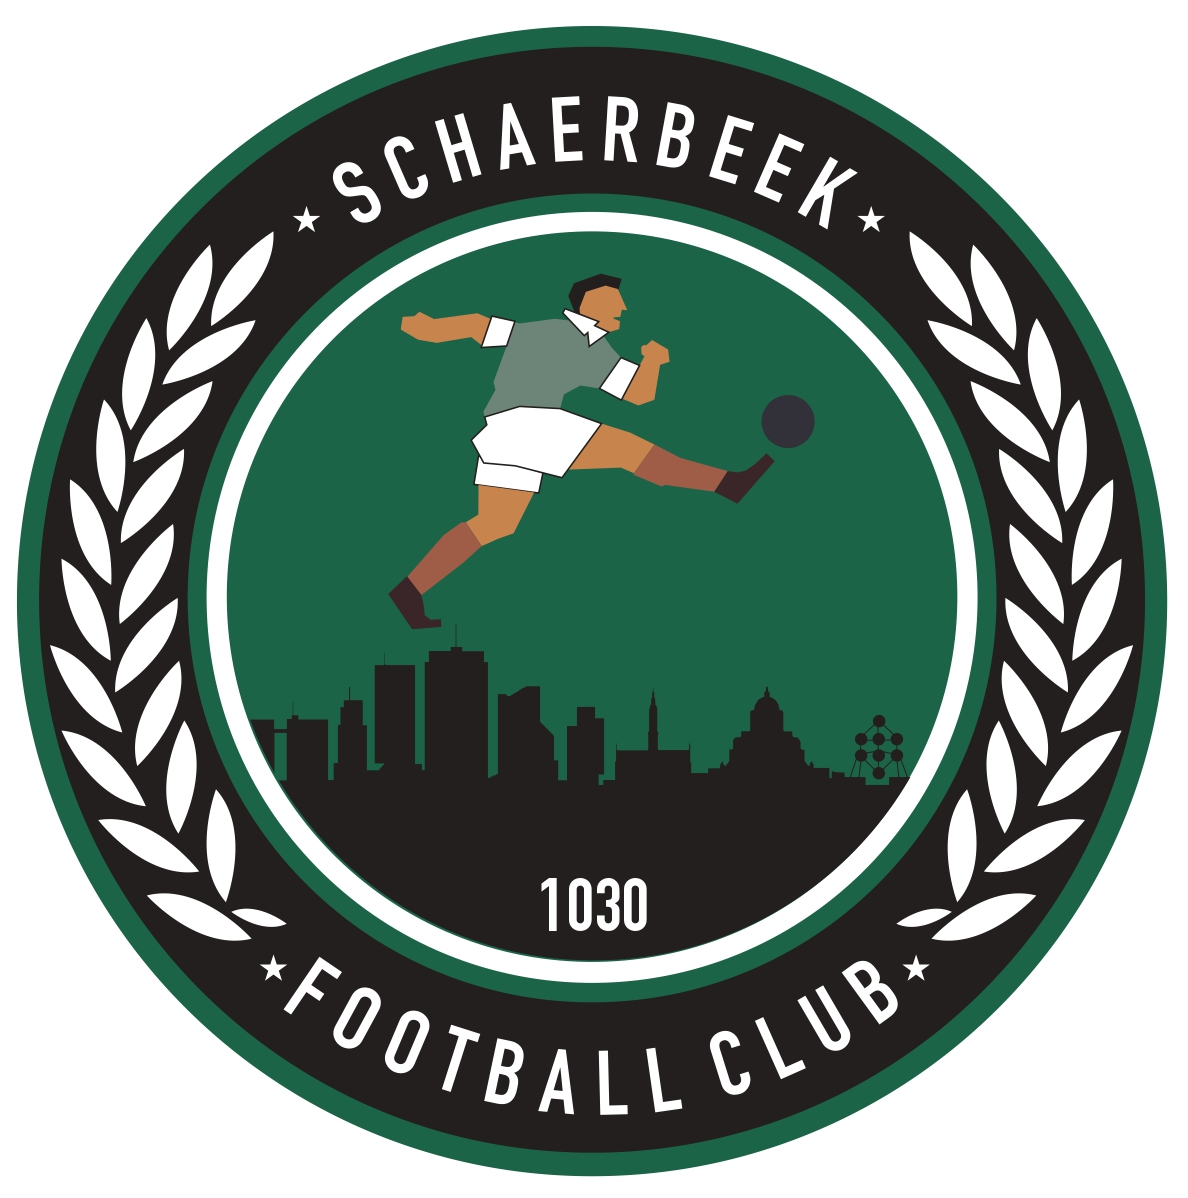 14 - Football Club Schaerbeek